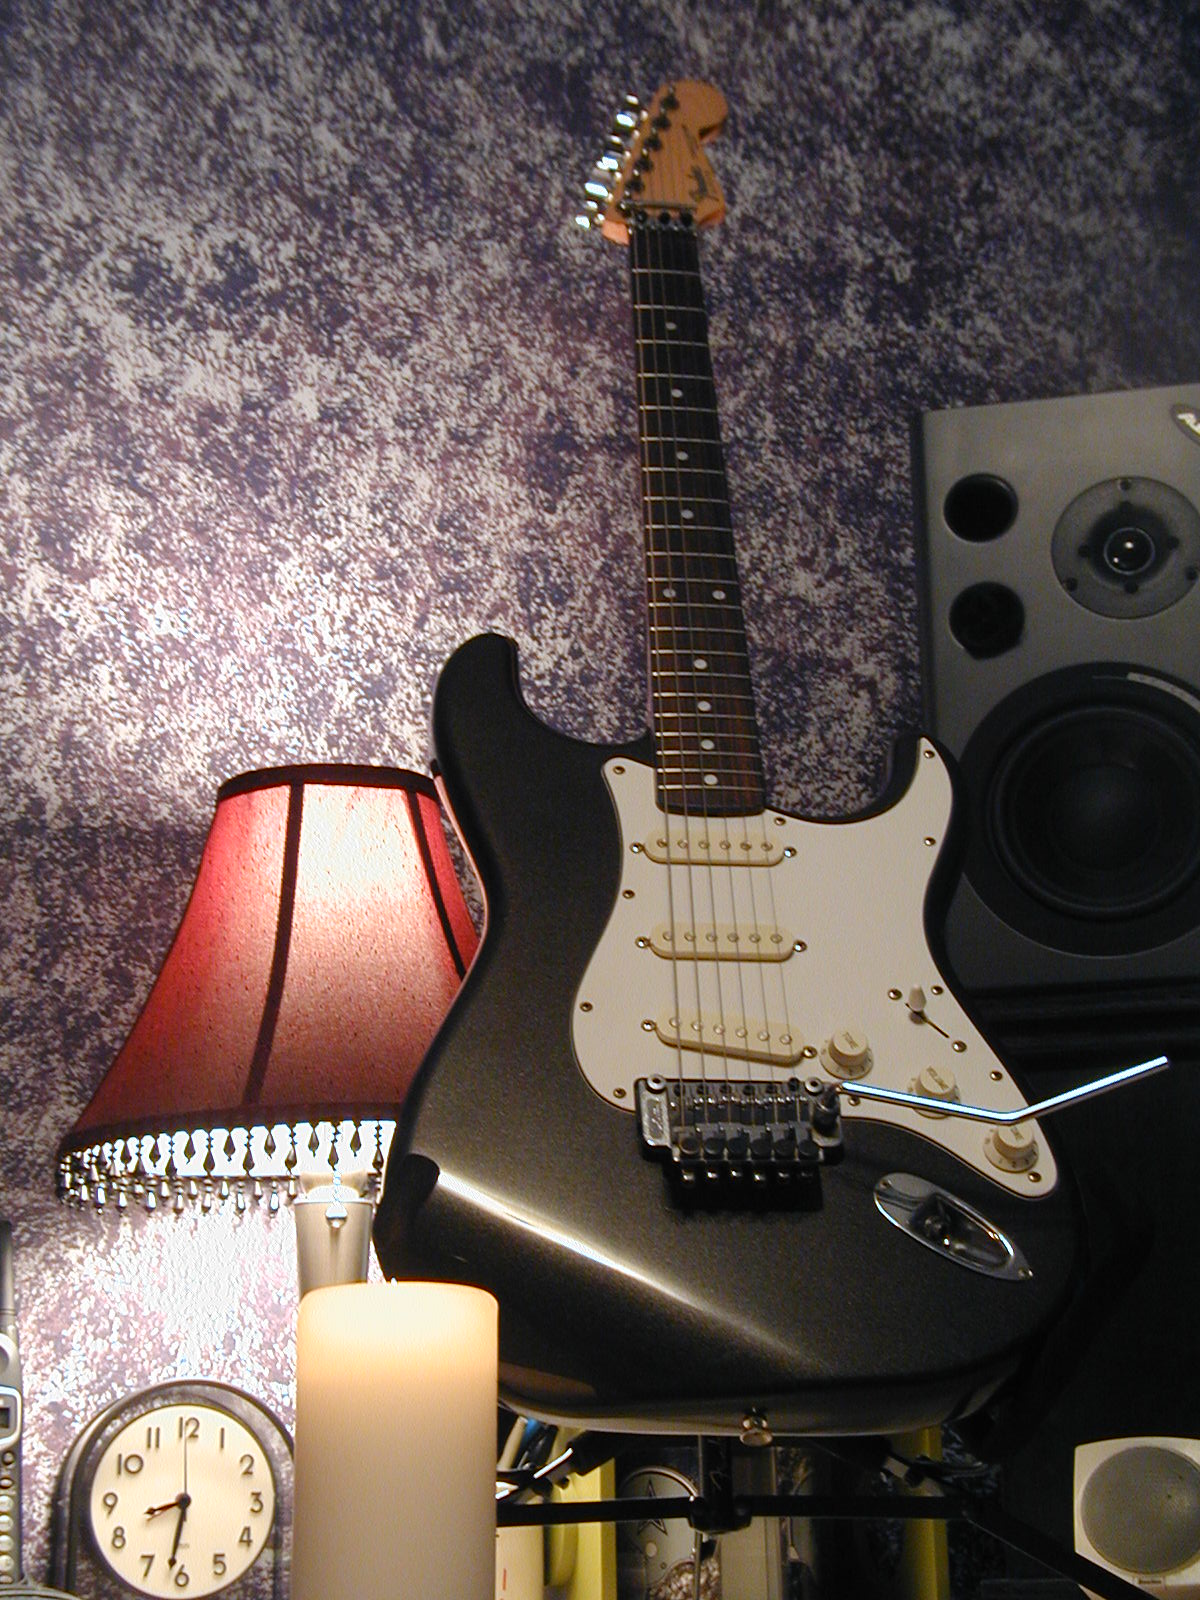 My Fender Sratocaster Guitar